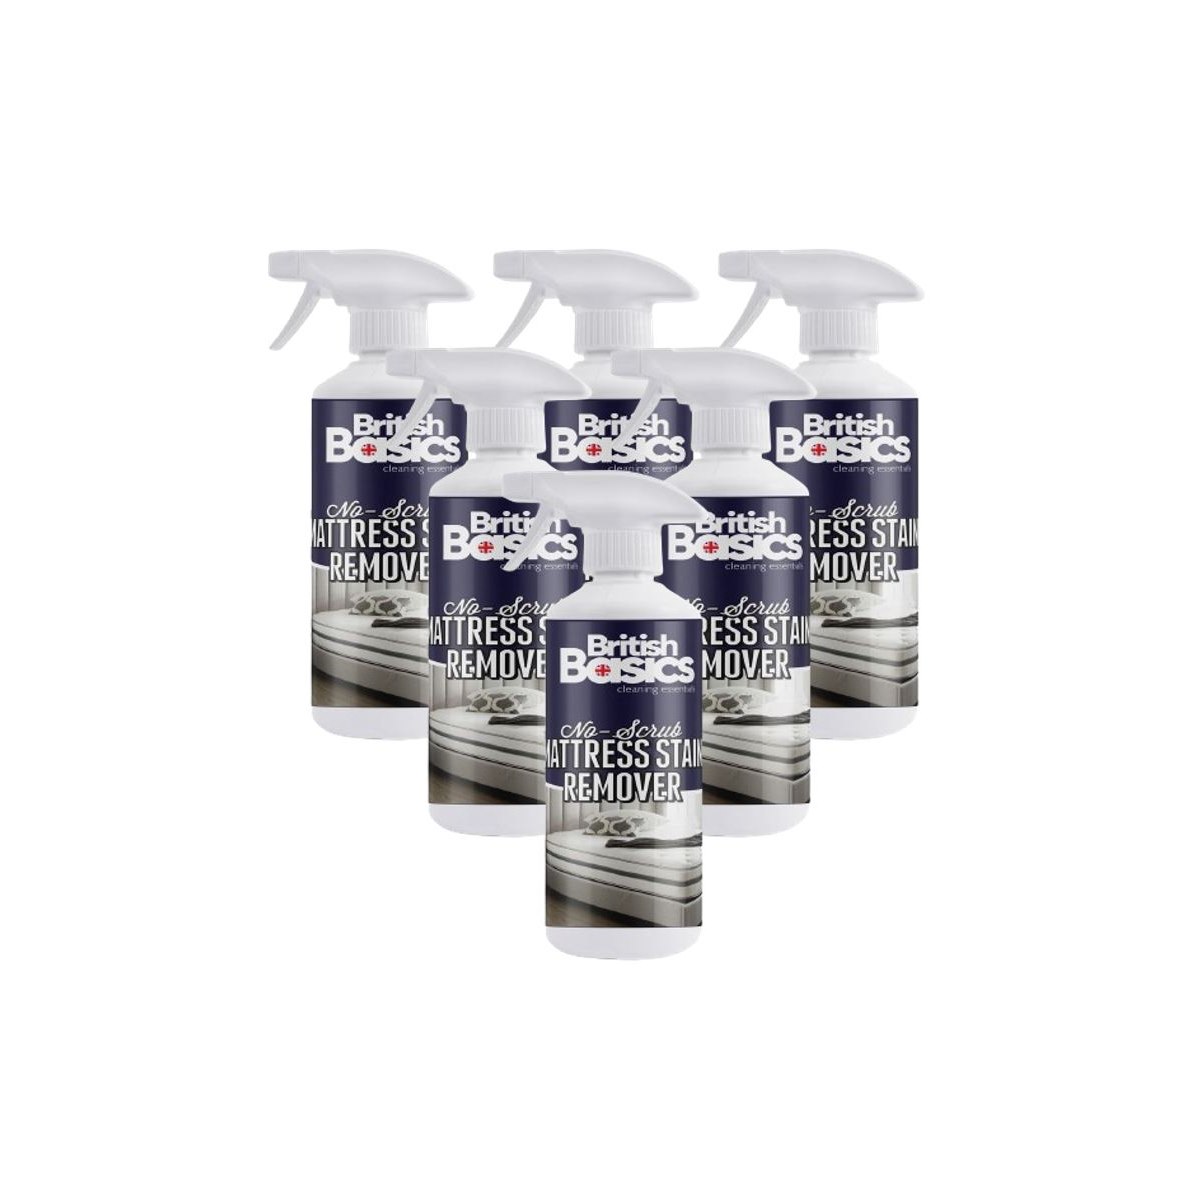 Case of 6 x British Basics Mattress Stain Remover Spray 500ml